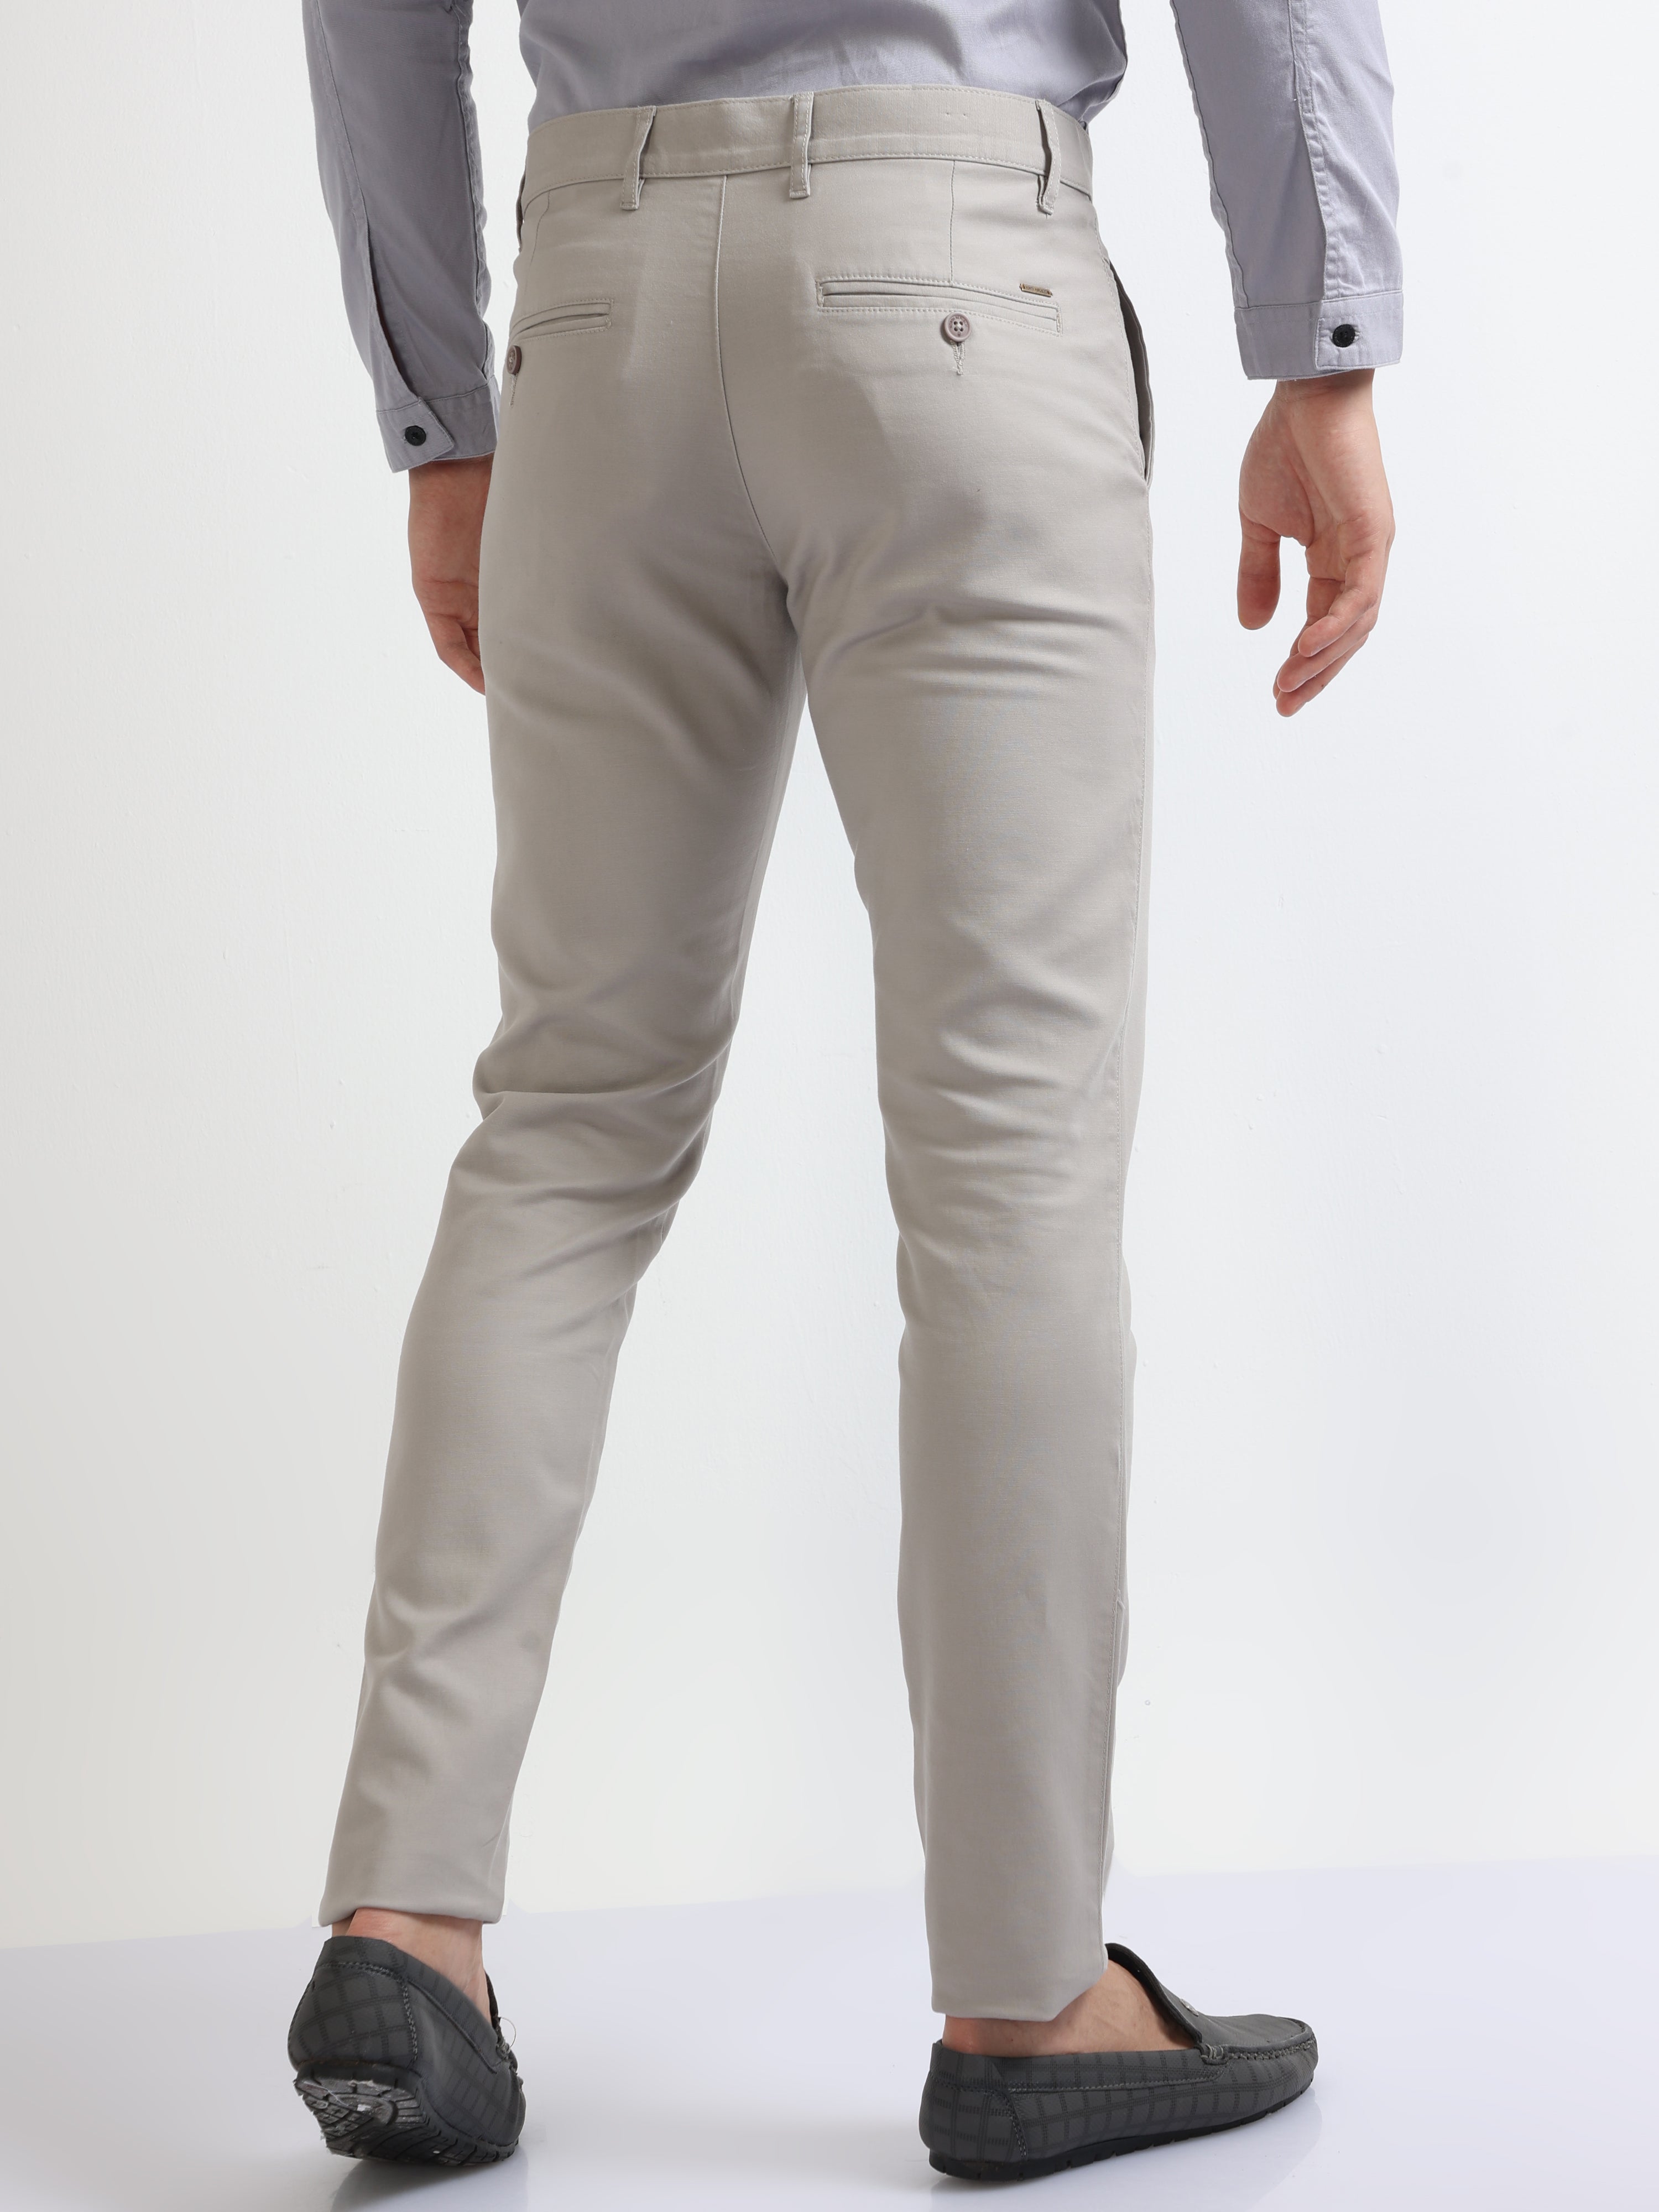 Berluti Men's Cotton-Stretch Chino Trousers - Bergdorf Goodman